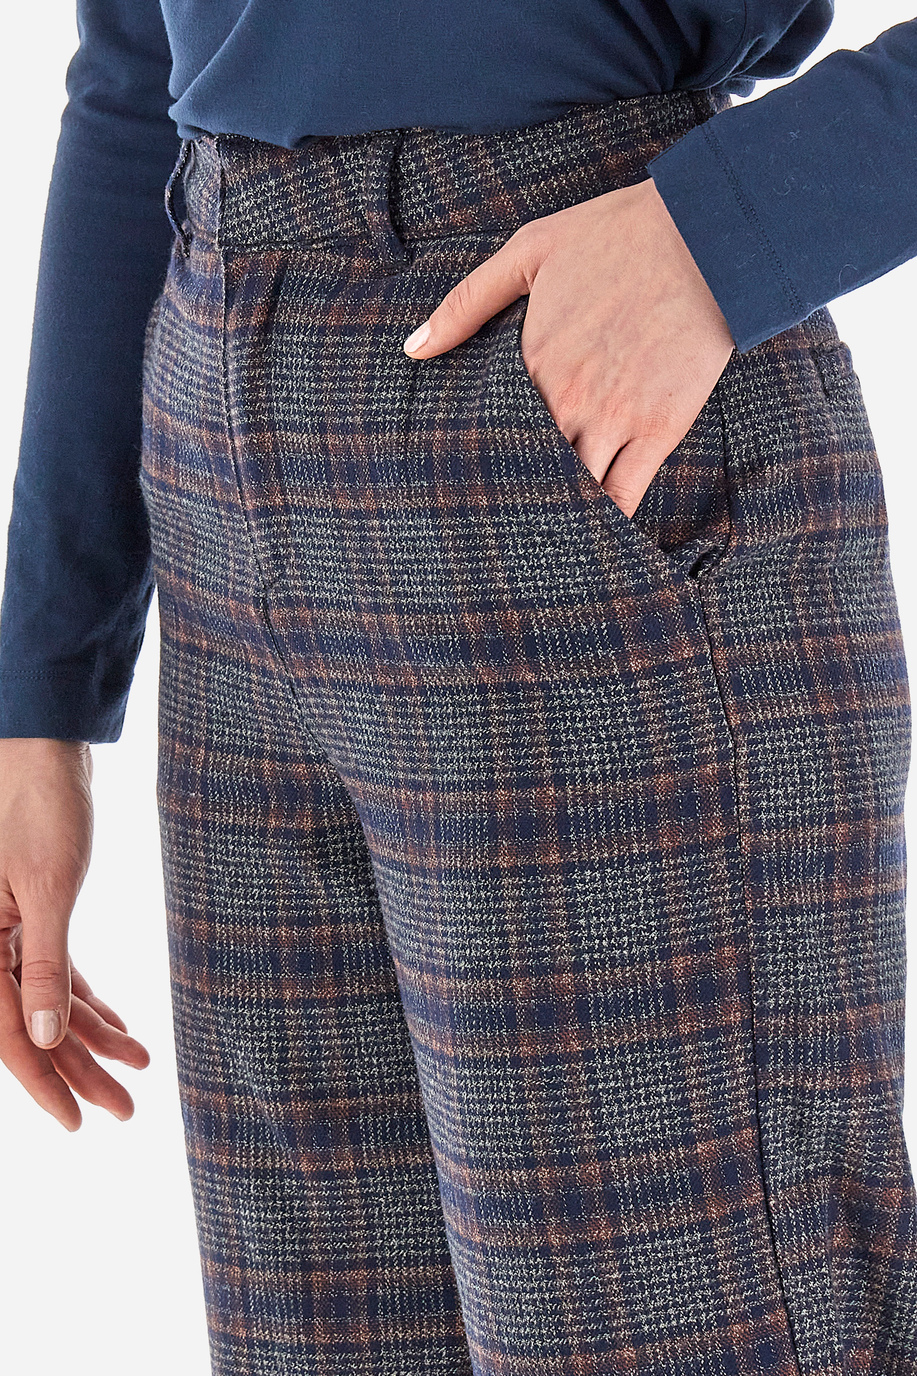 Pantaloni donna regular fit - Wazir - Business Look donna | La Martina - Official Online Shop